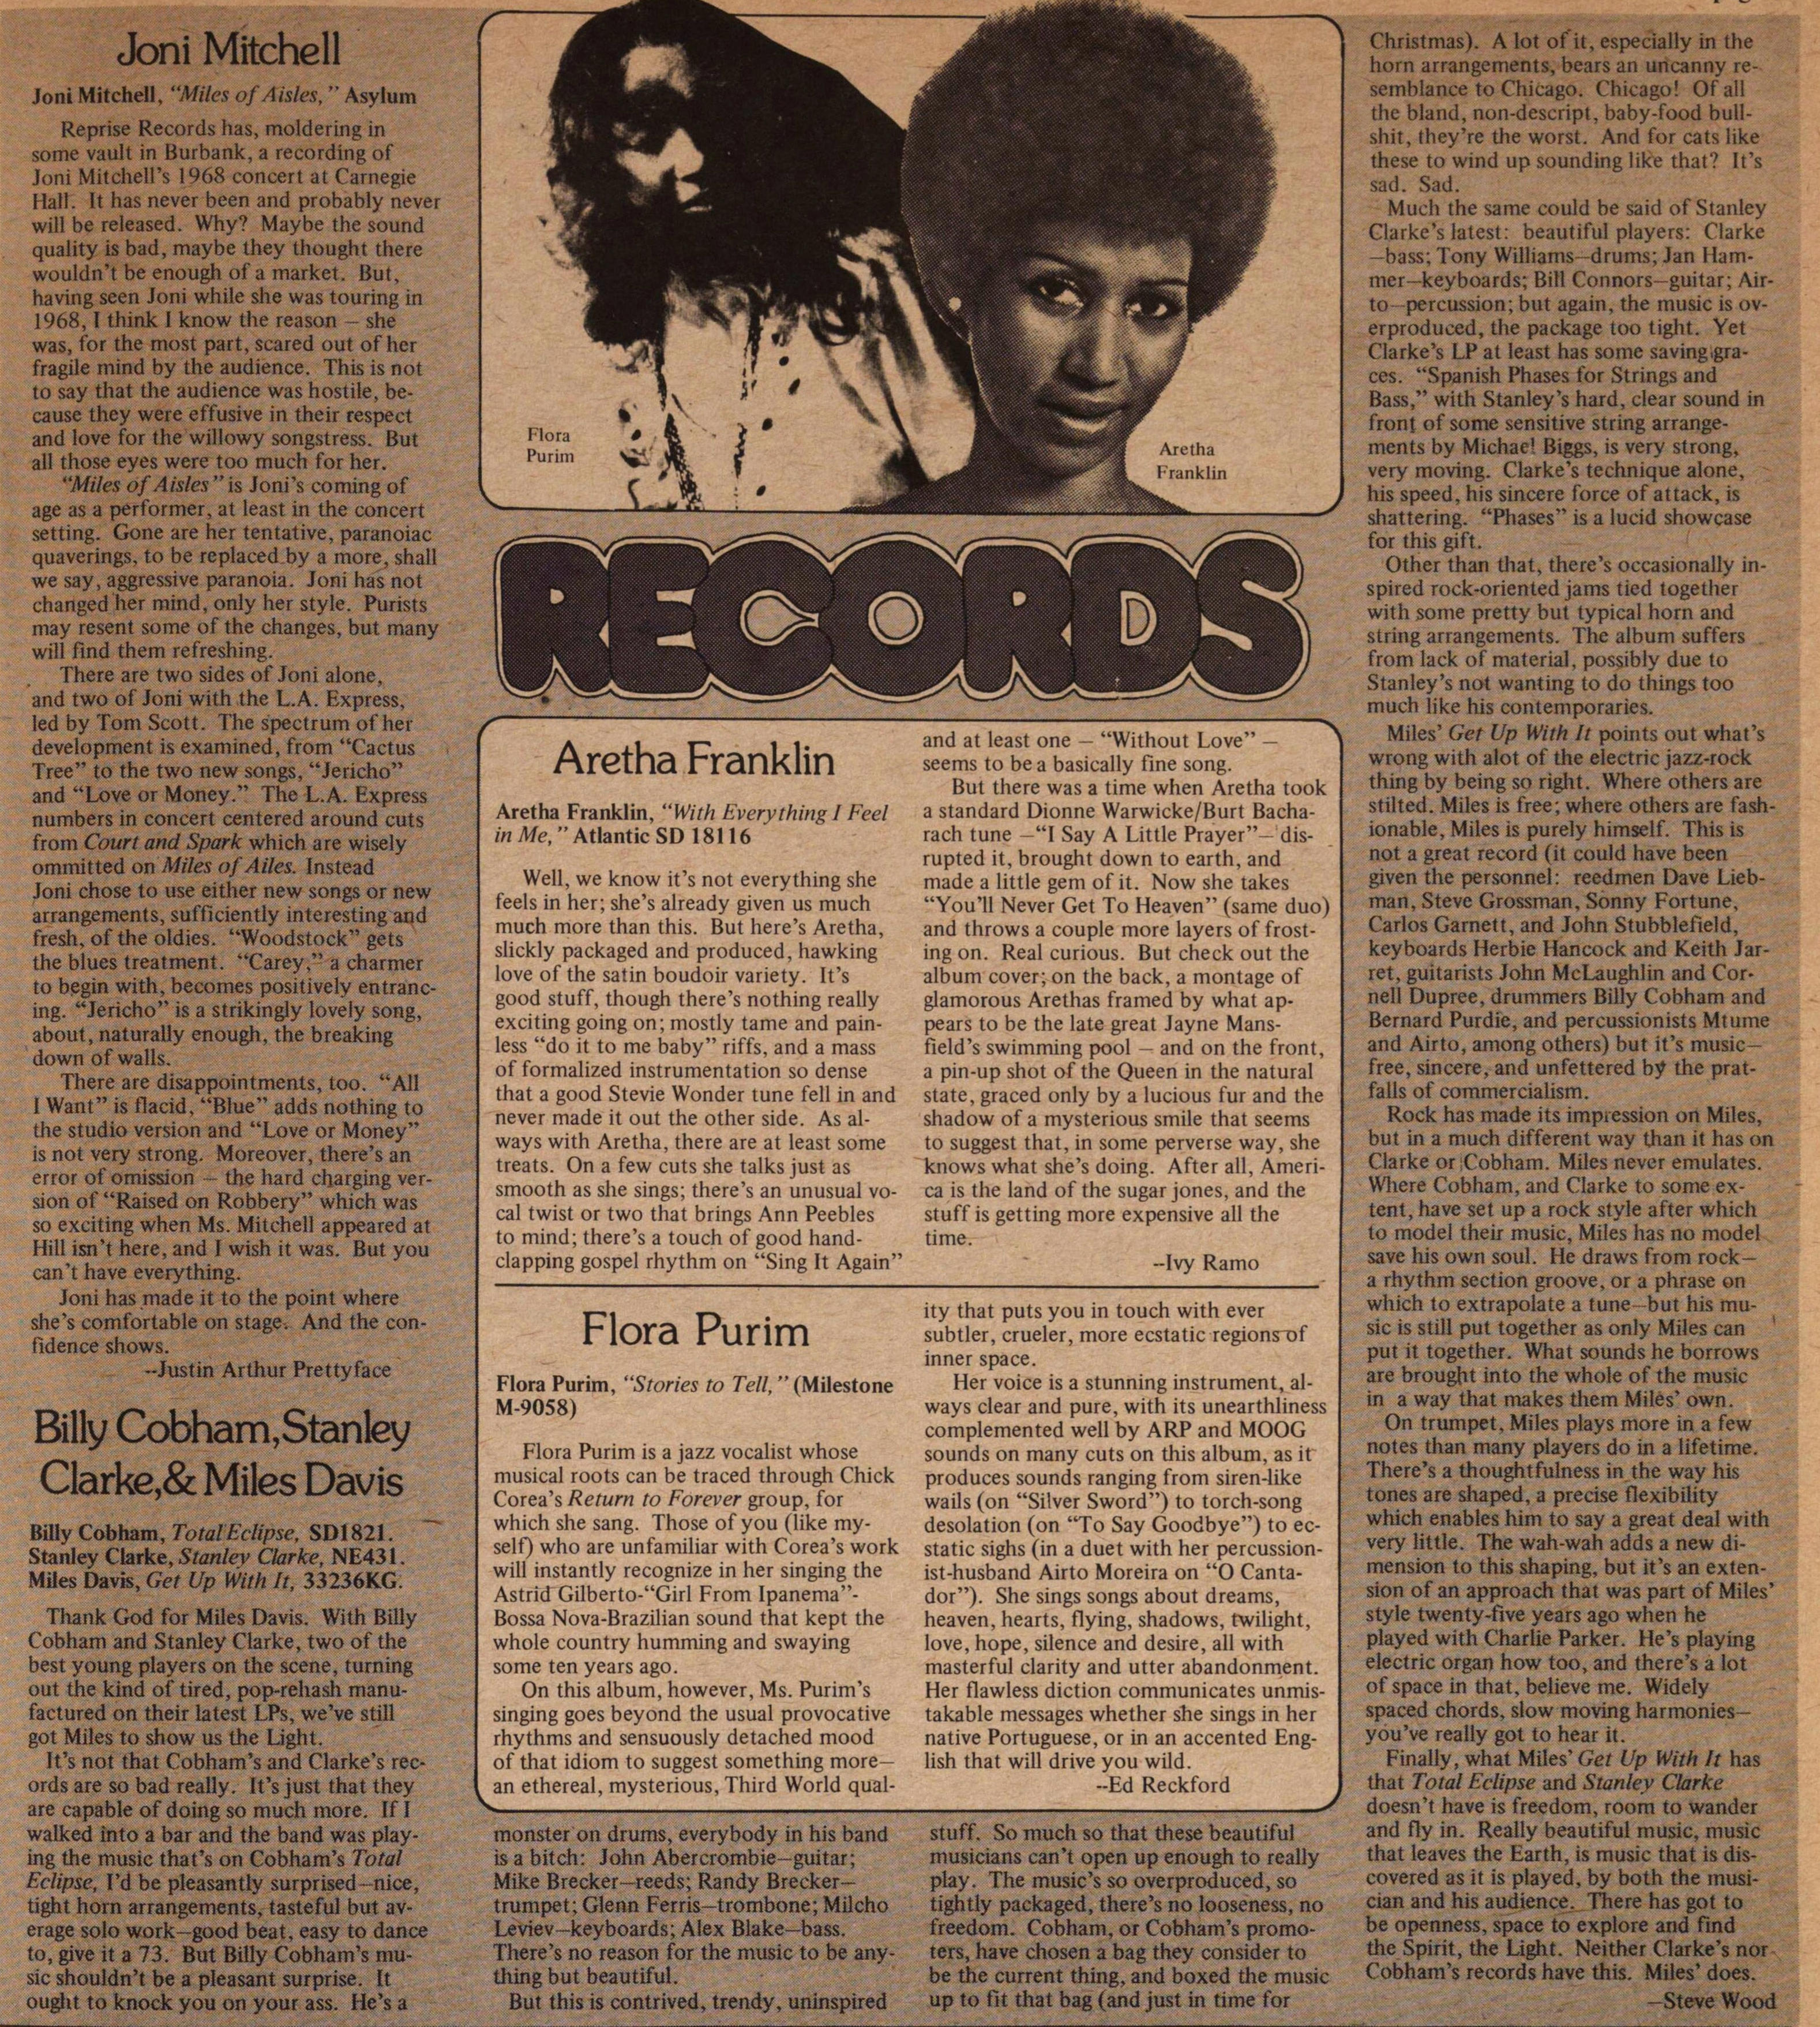 Billy Cobham, Stanley Clarke, & Miles Davis Image - Newsprint - HD Wallpaper 